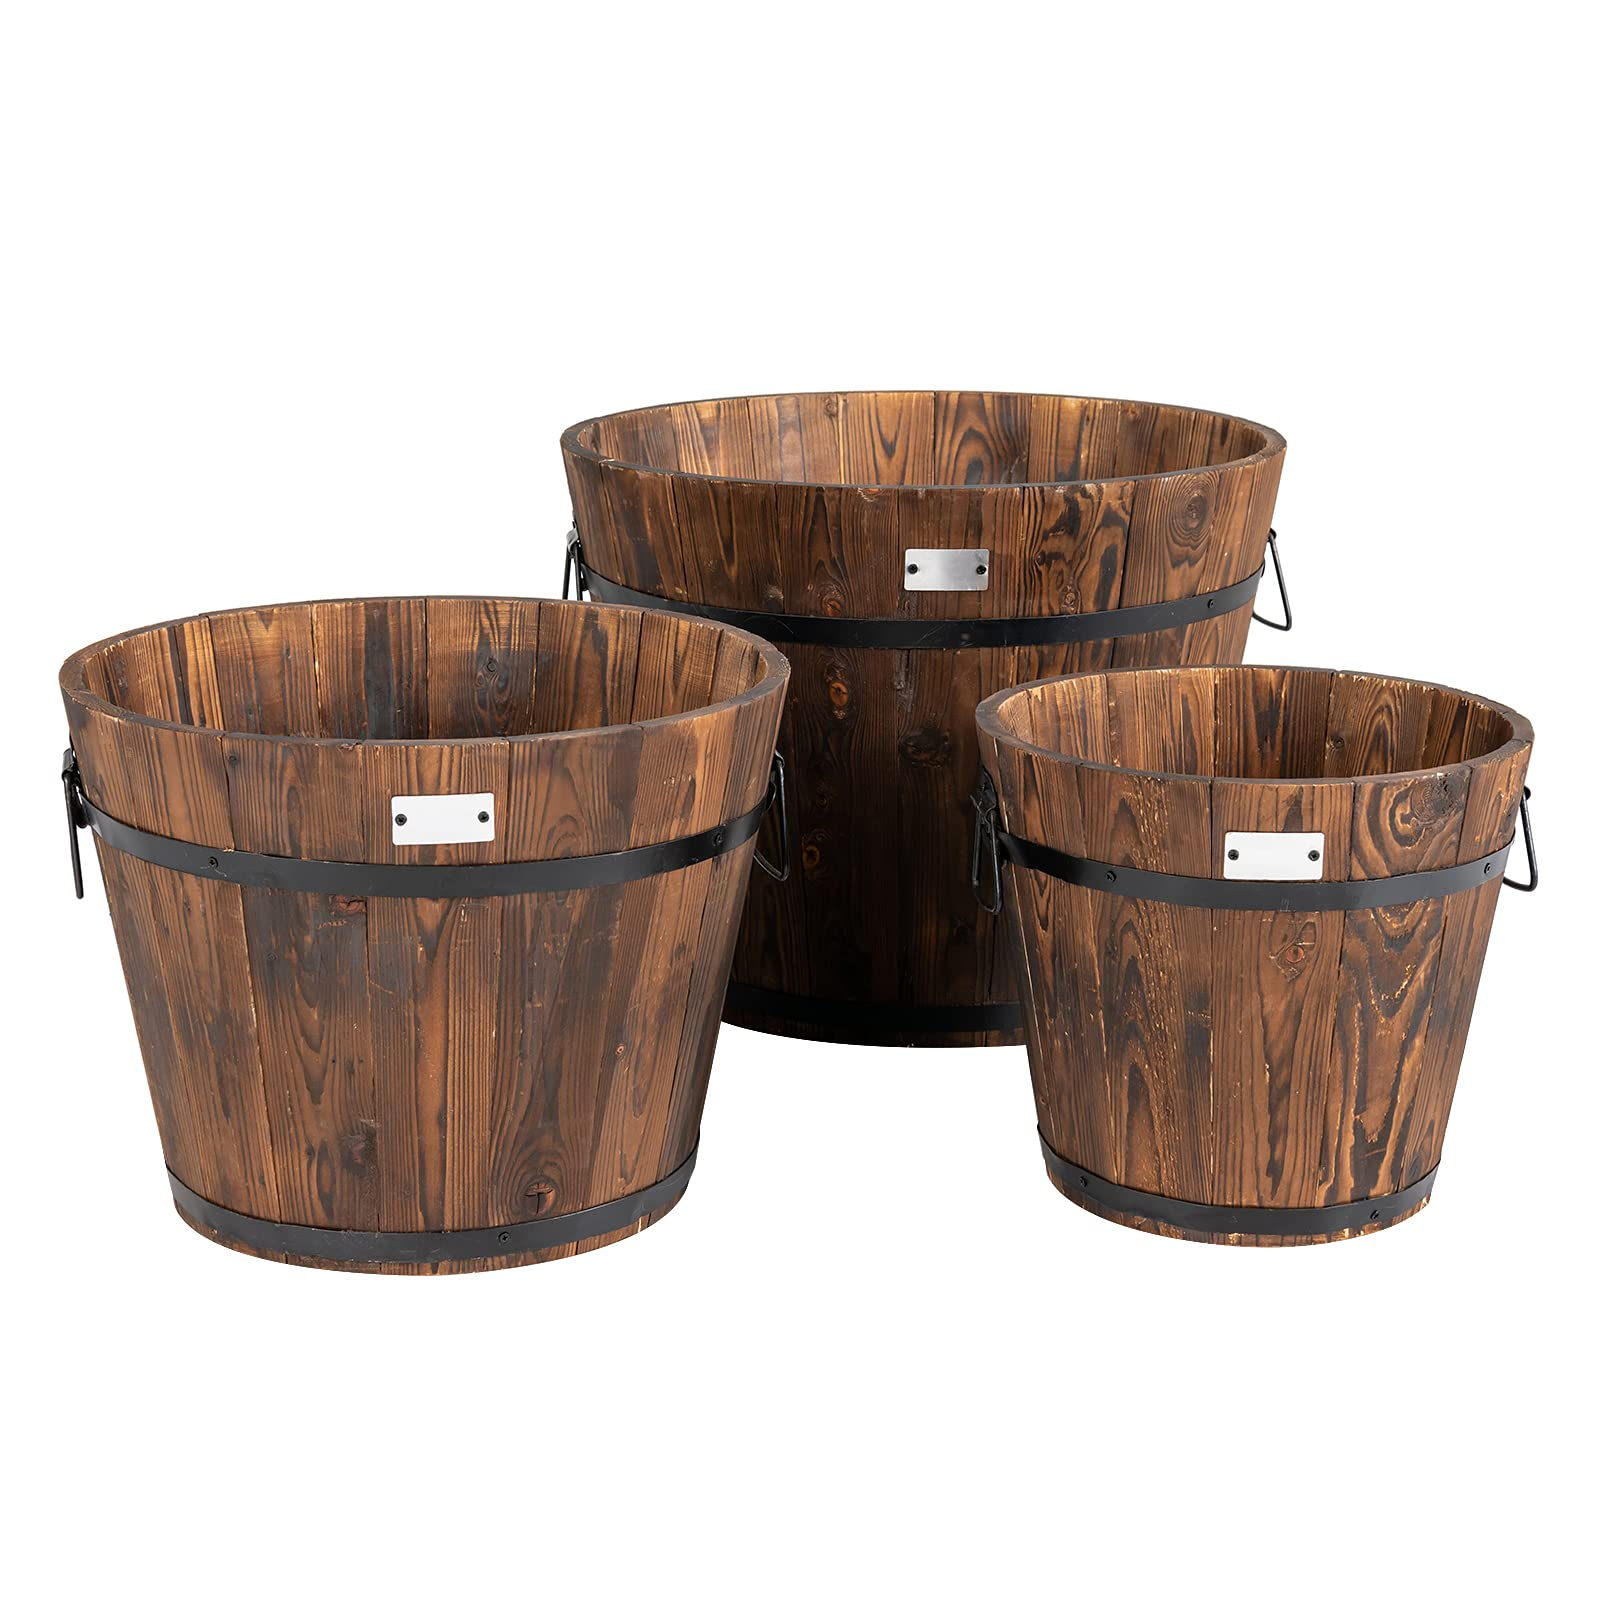 3 Pieces Wood Bucket Raised Beds for Plants Herbs Veggies